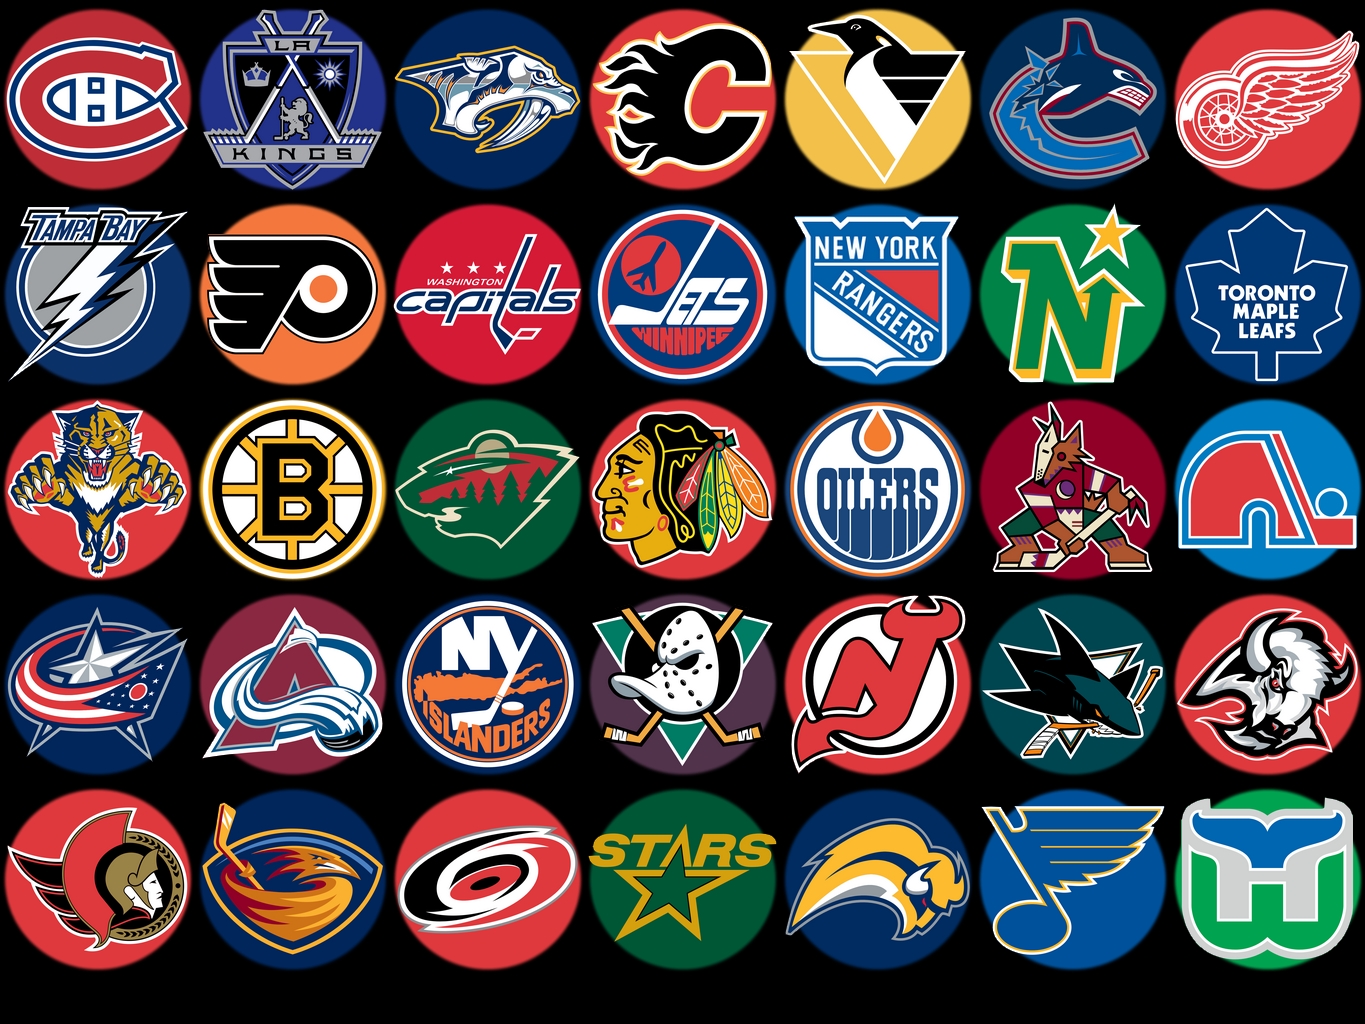 Картинки хоккейных команд. Хоккейные команды НХЛ. Значки хоккейных команд НХЛ. Эмблемы NHL команд. Хоккейные команды NHL.